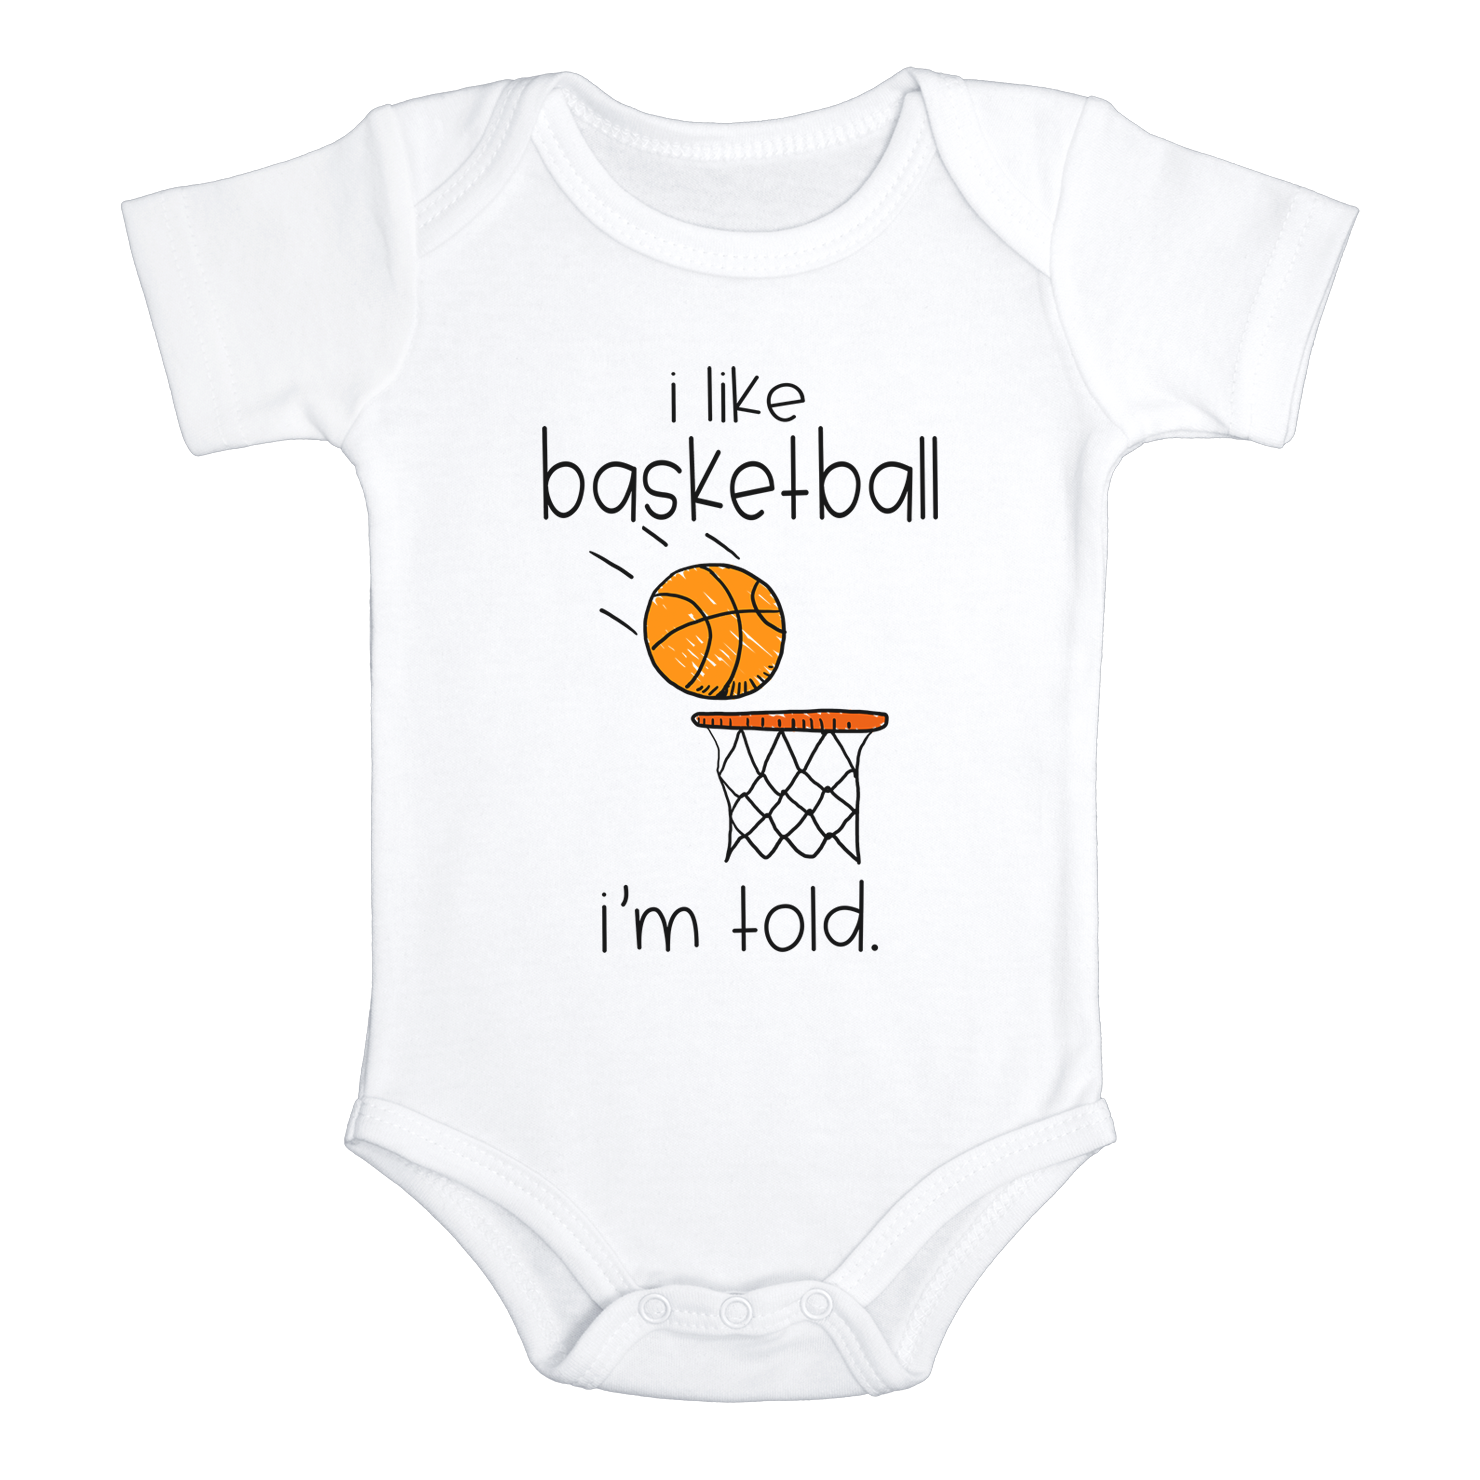 I LIKE BASKETBALL I'M TOLD Funny baby onesies basketball bodysuit (white: short or long sleeve) - HappyAddition